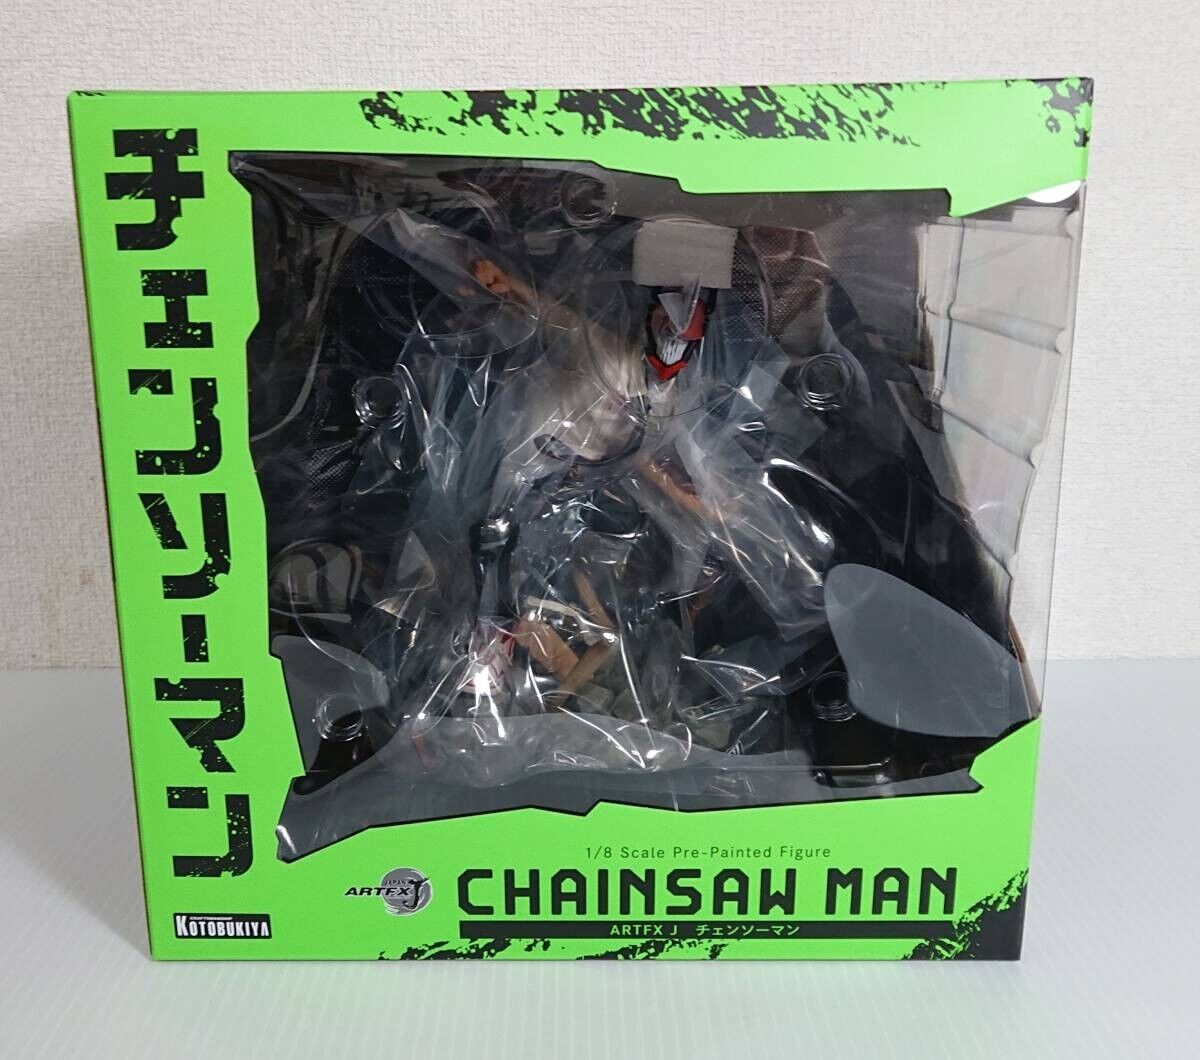 Kotobukiya ARTFX J Chainsaw Man 1/8 scale 205mm PVC Figure Mappa New